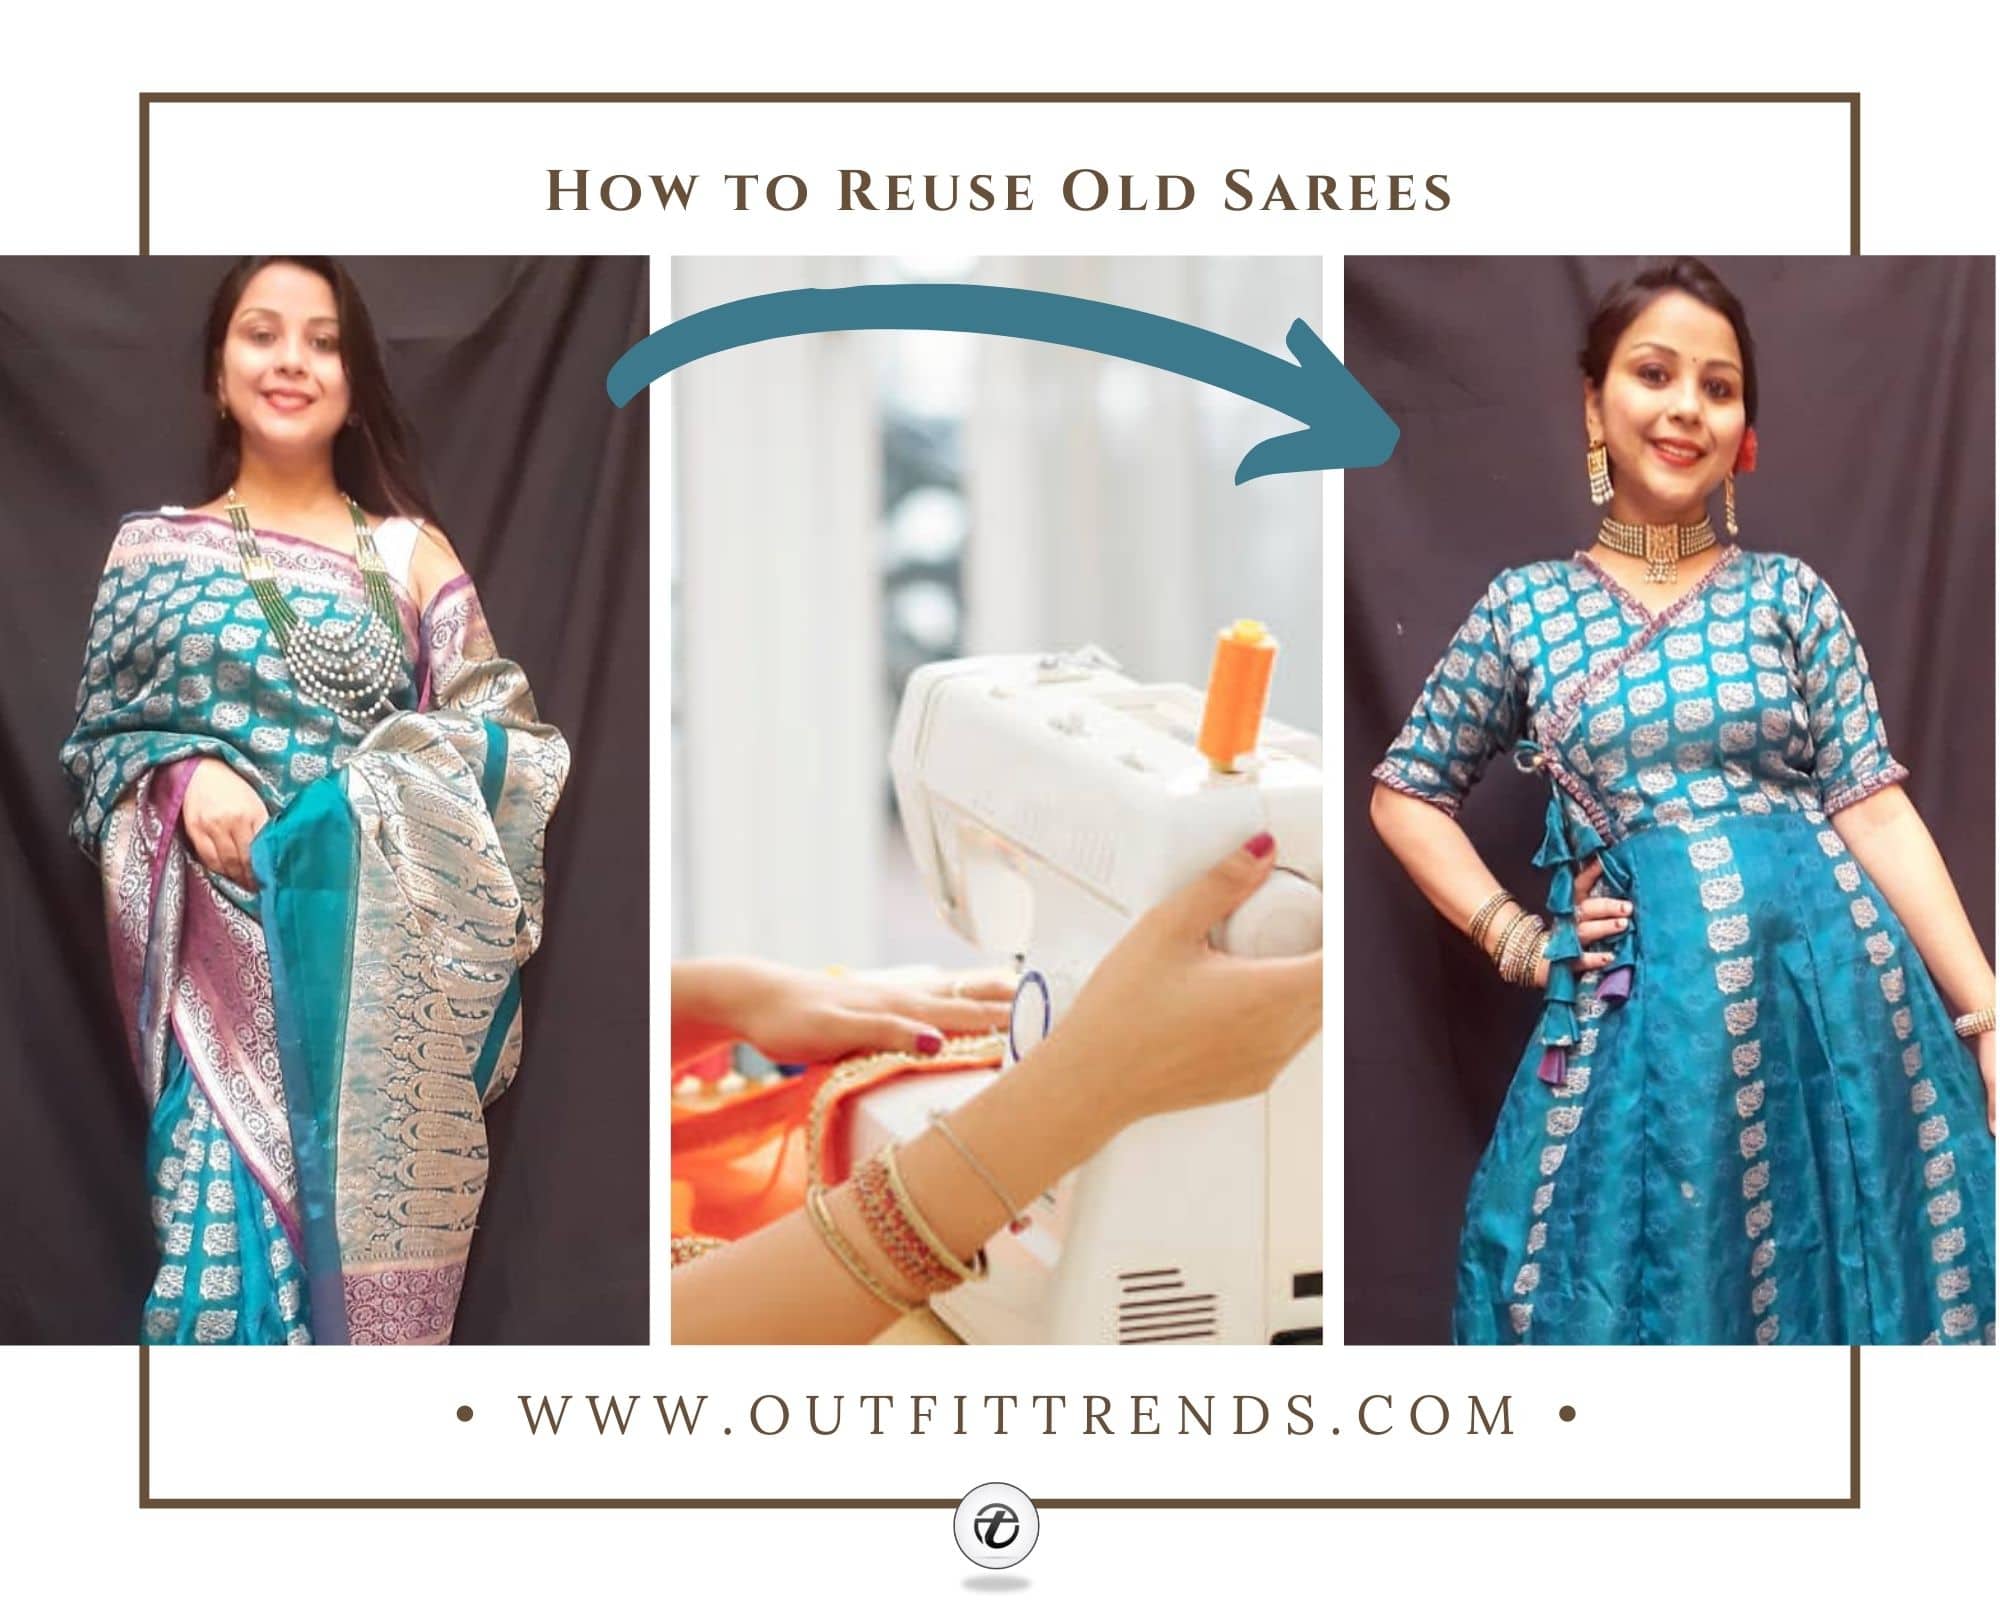 Old saree into kids dress ideas/transform old saree into kids dress/reuse old  saree into kids dress - YouTube